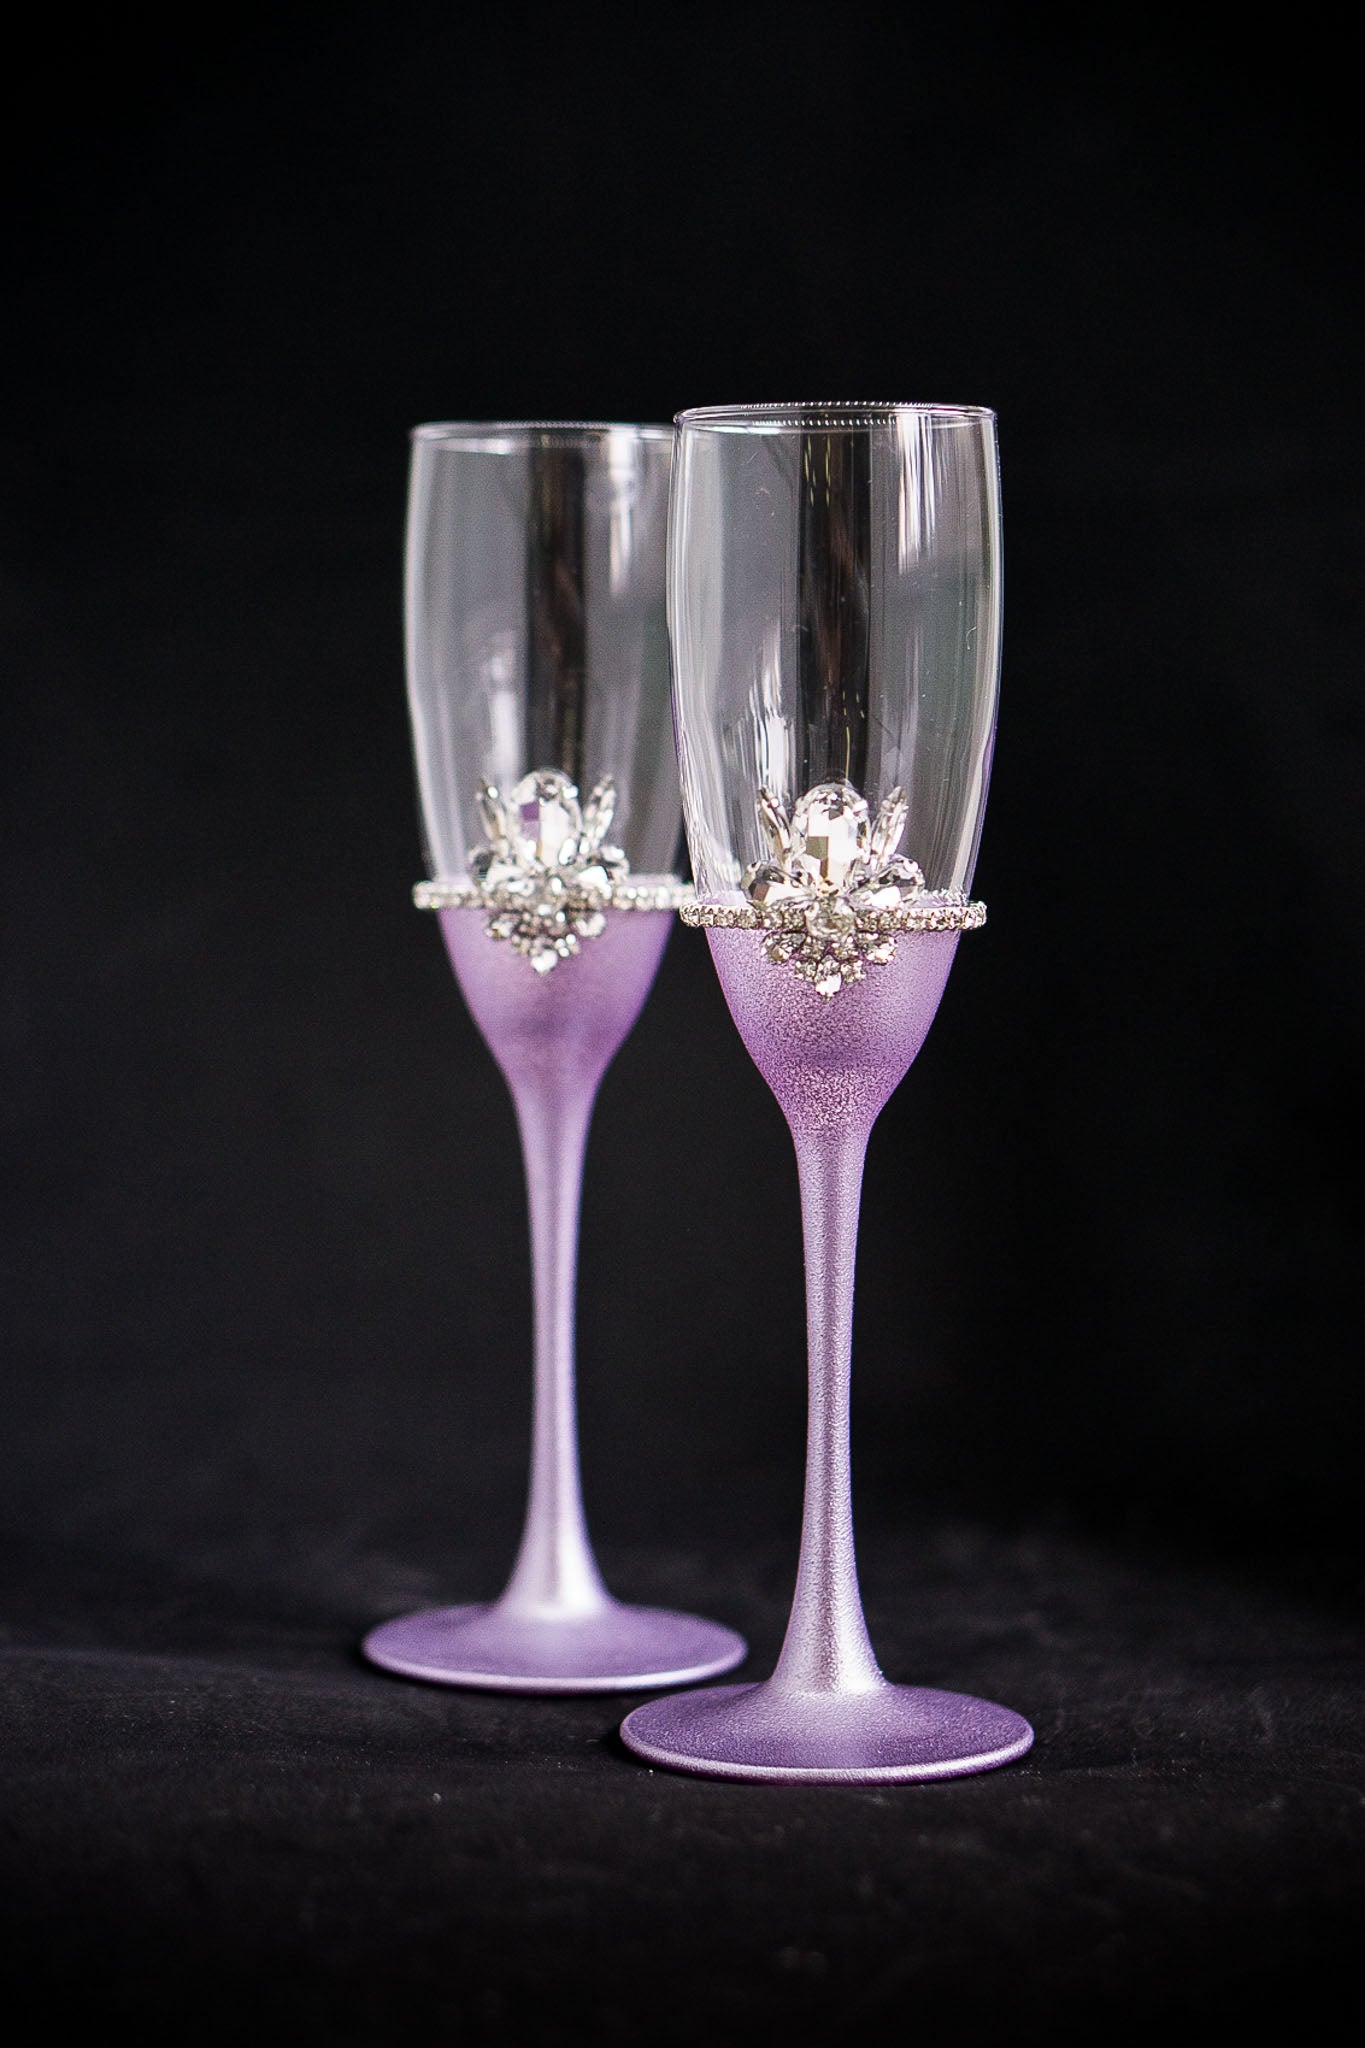 Lavender and silver anniversary glasses